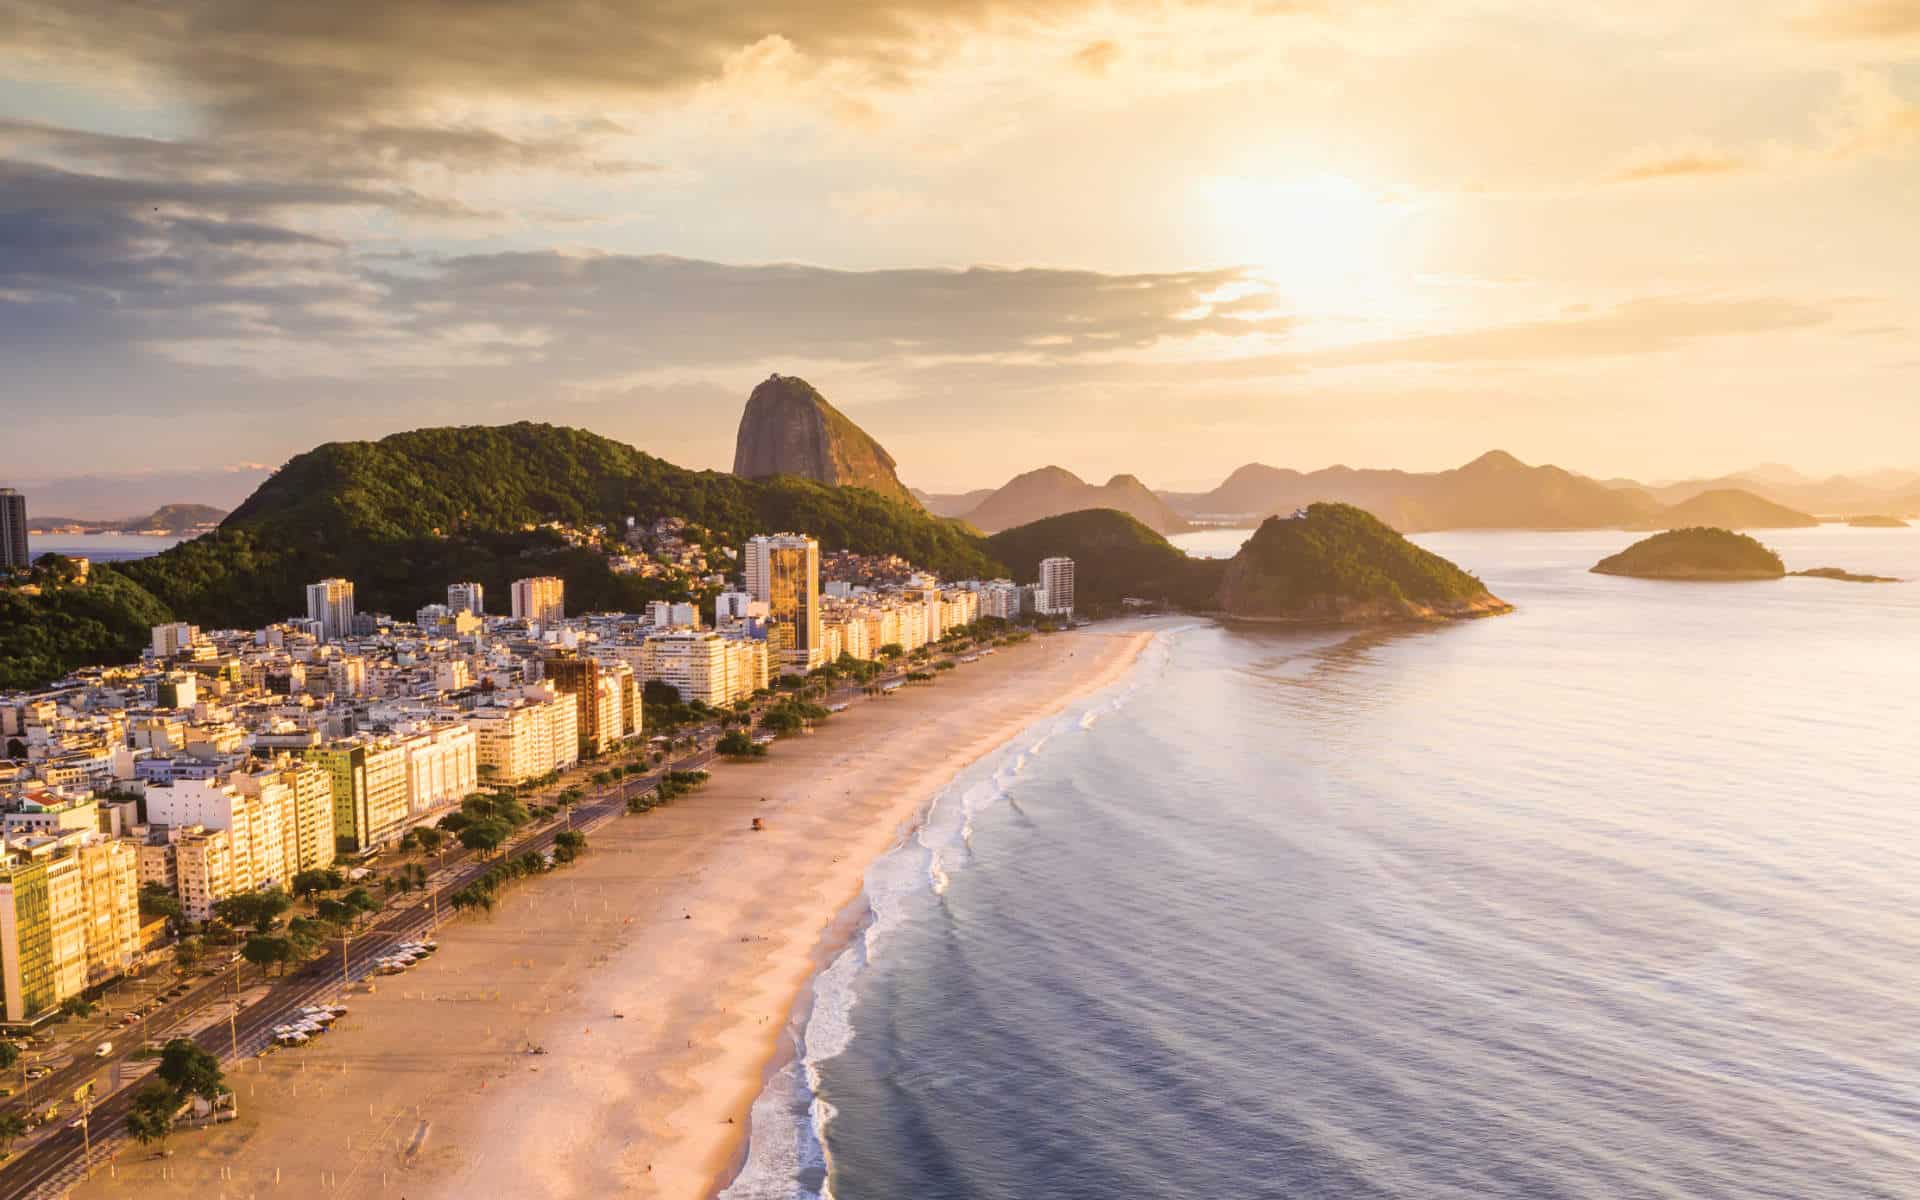 The Silver Nova Grand Voyage 2024 will call at Rio de Janeiro.